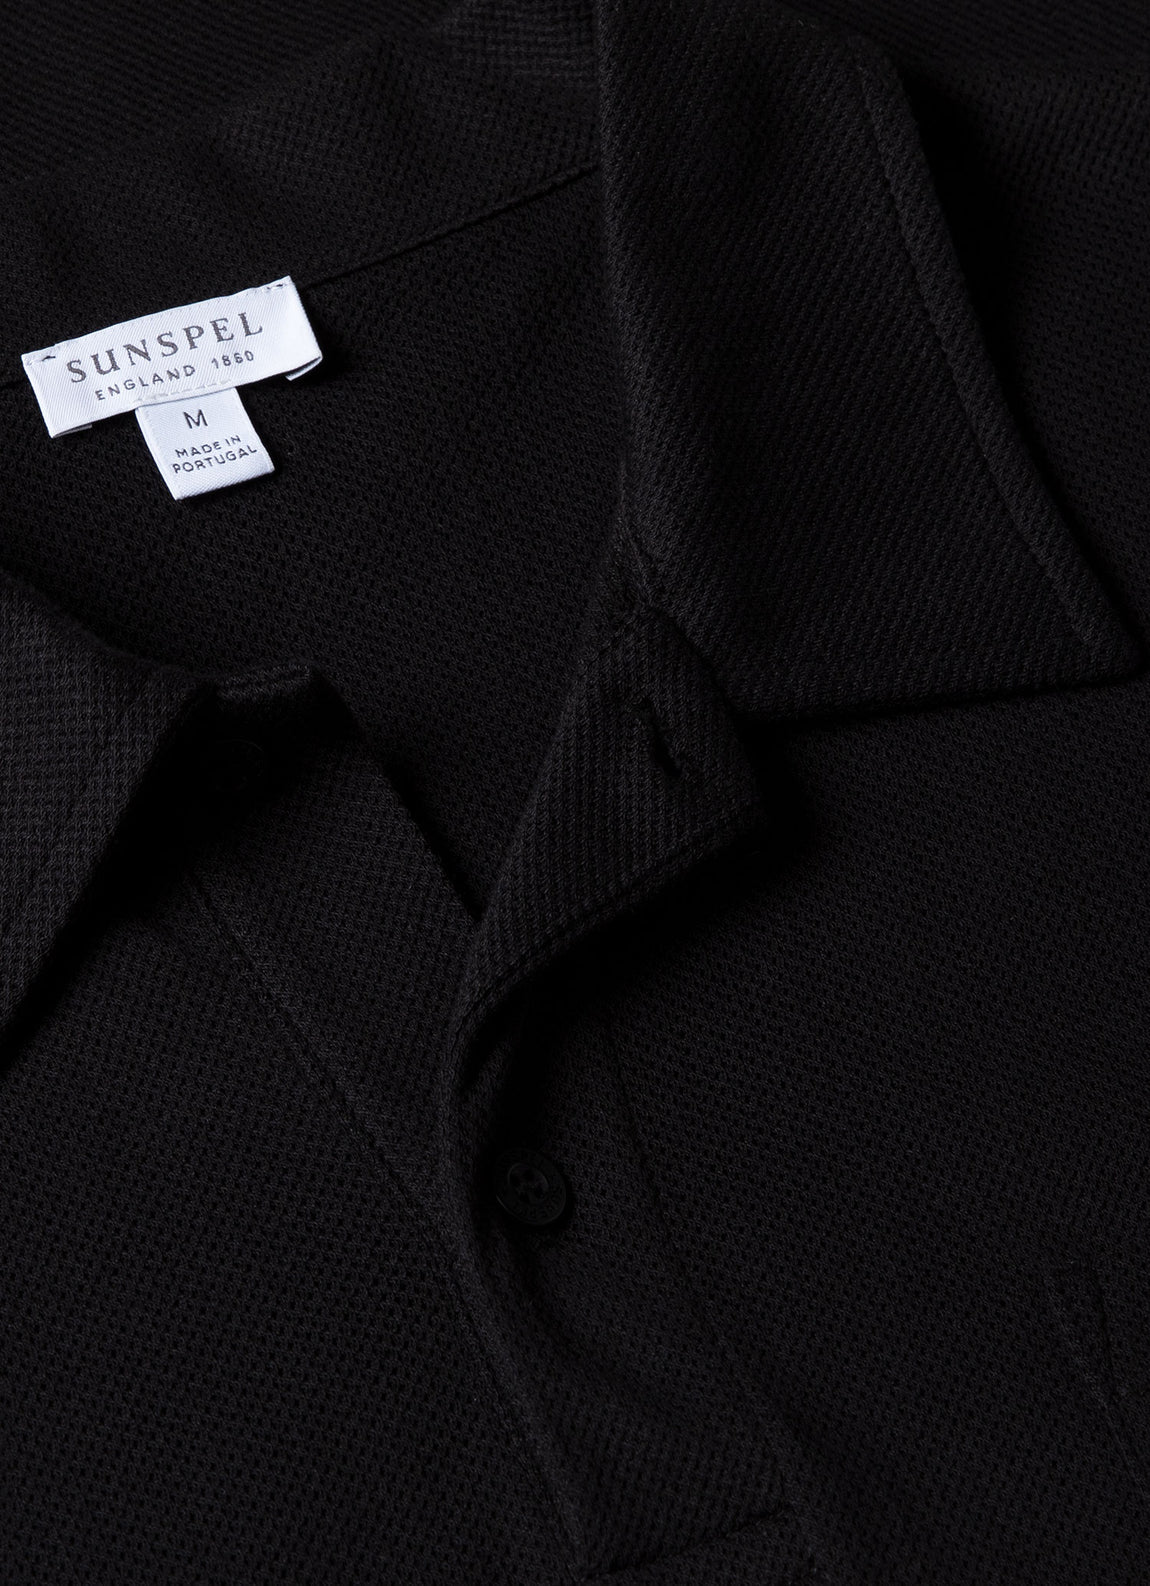 Men's Riviera Polo Shirt in Black